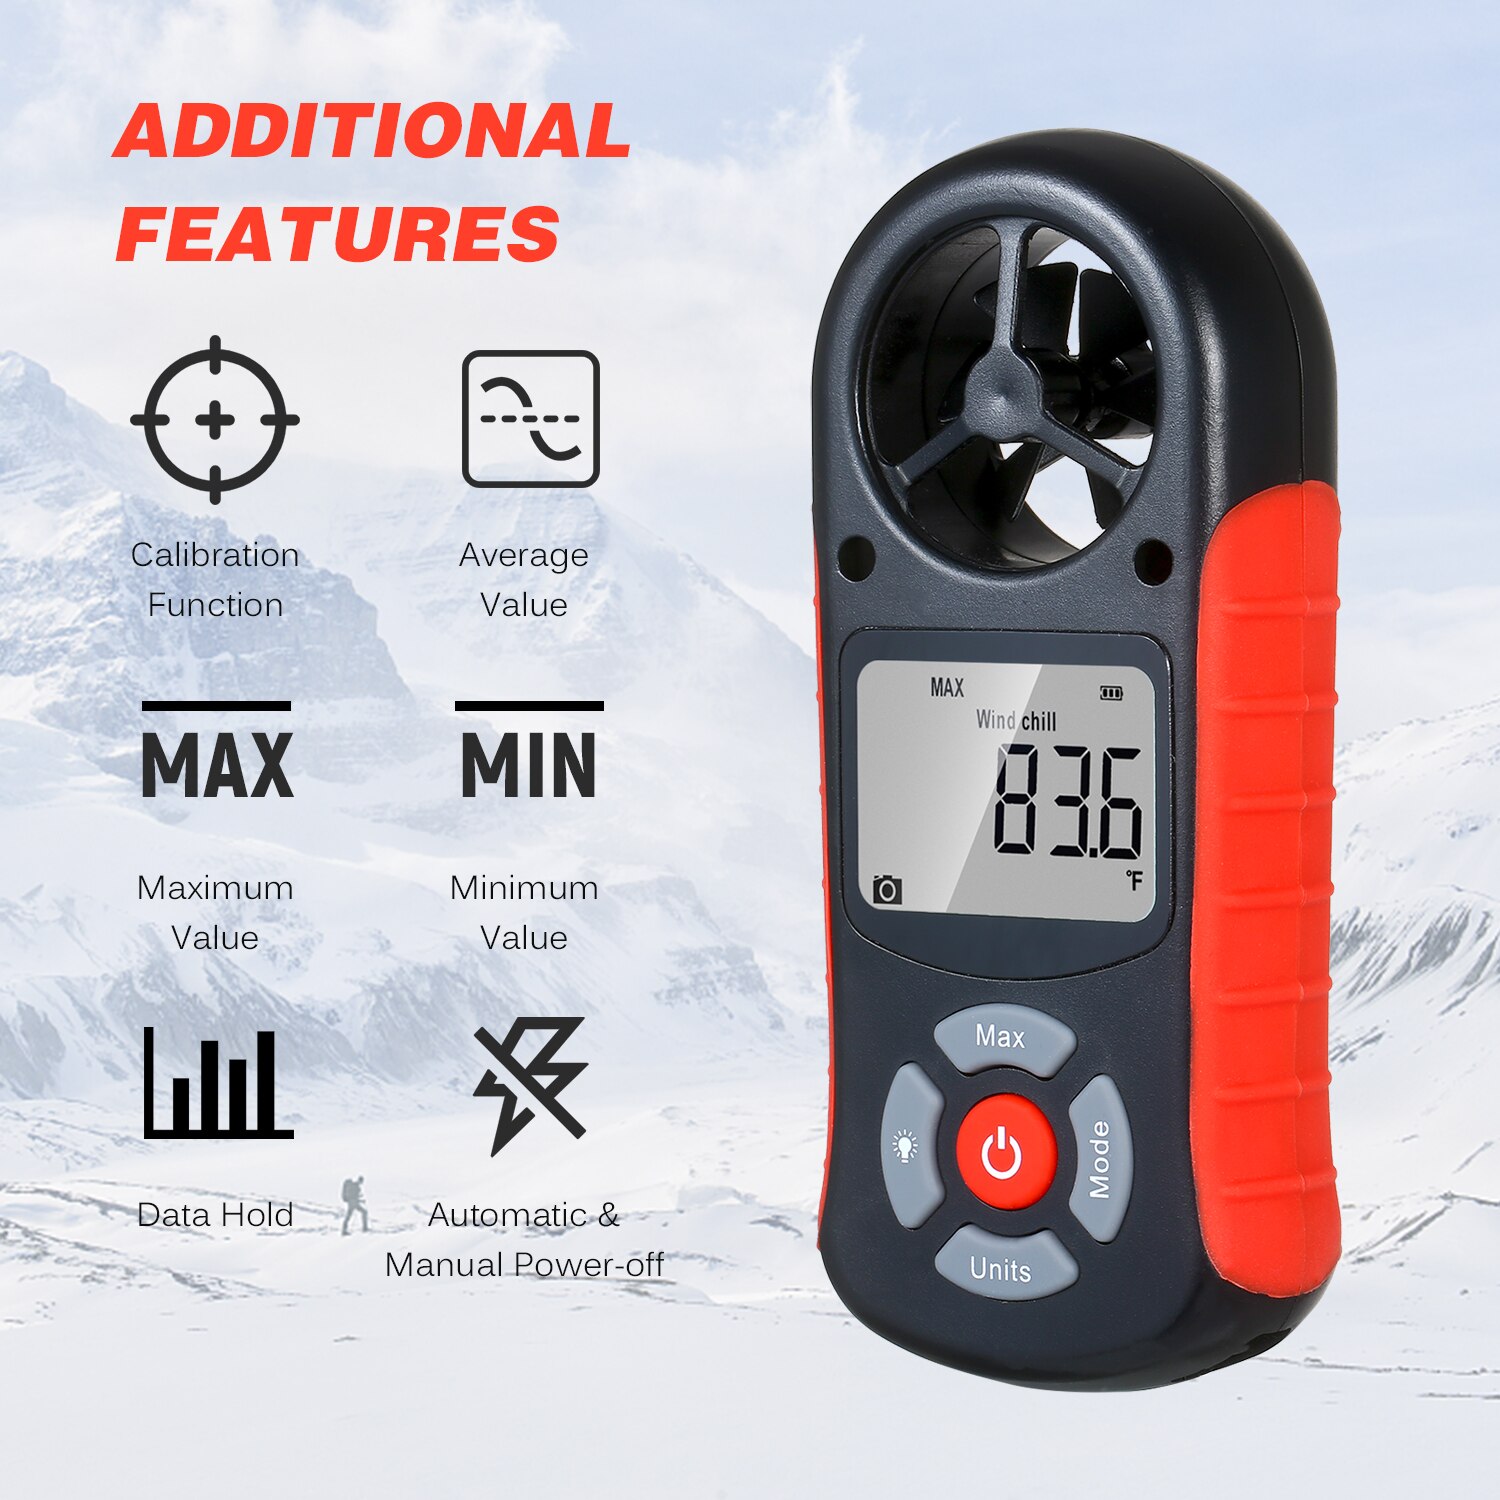 Handheld Digital Anemometer Wind Speed/Wind Chill/Temperature/Humidity/Heat Index/Dew Point/Barometric Pressure/Altitude Meter